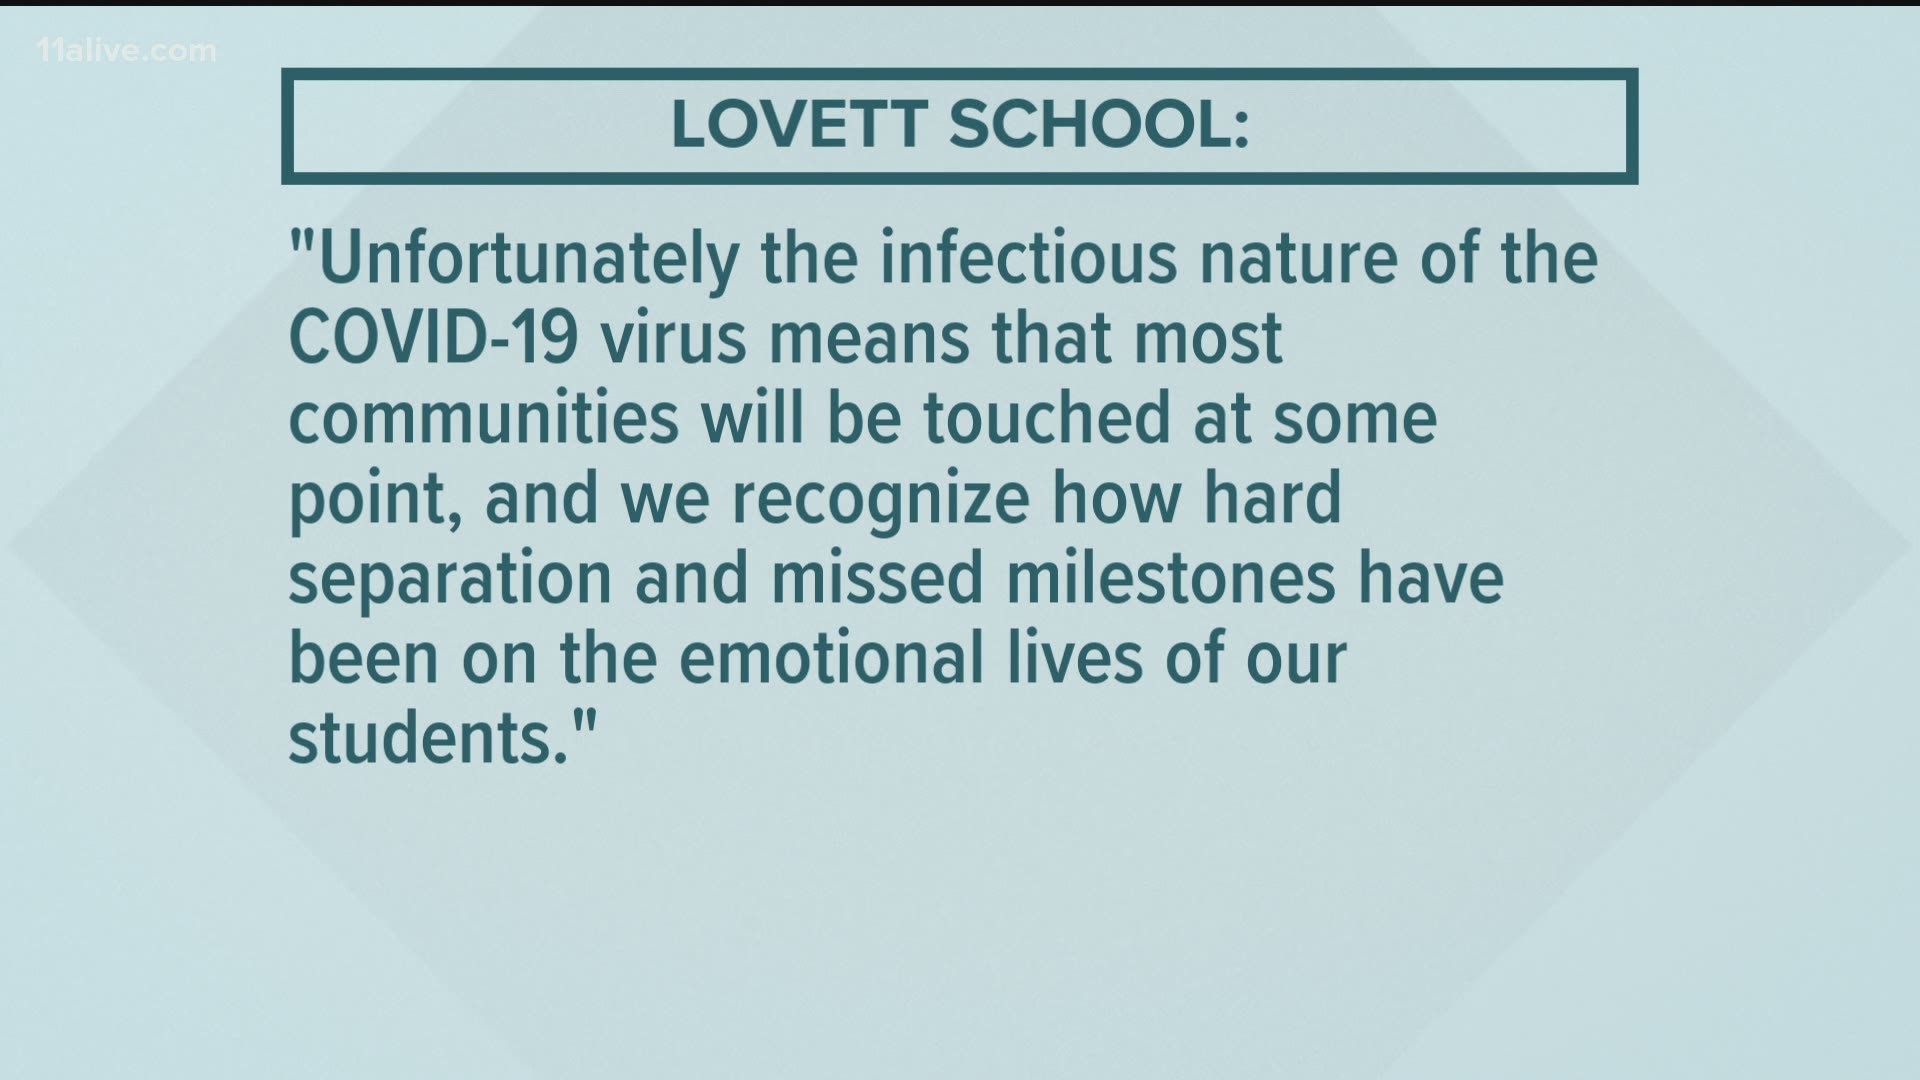 The shcool, Lovett School, was already operating remotely through virtual learning.